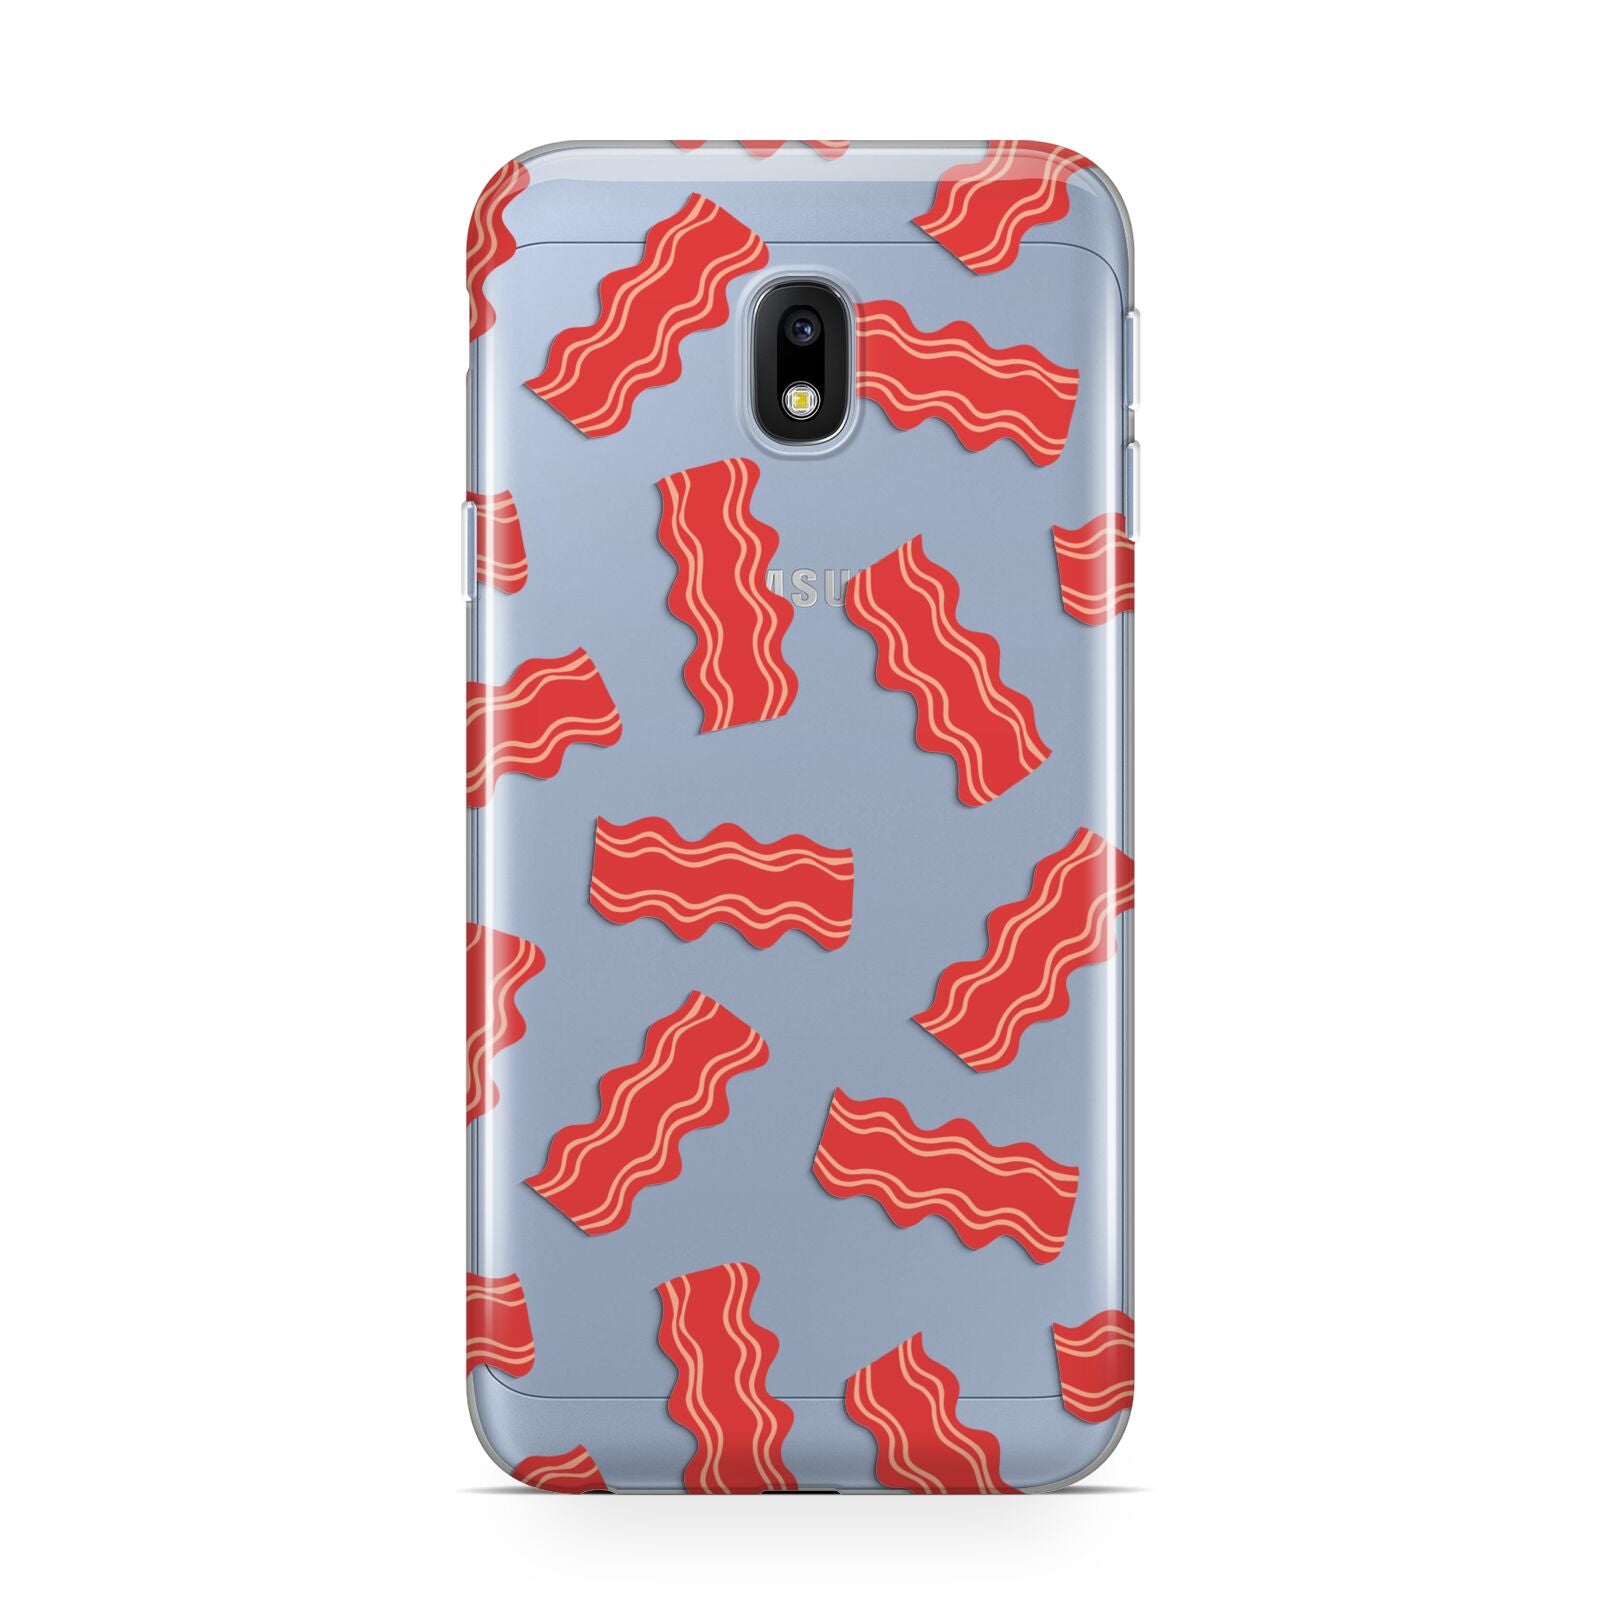 Bacon Samsung Galaxy J3 2017 Case